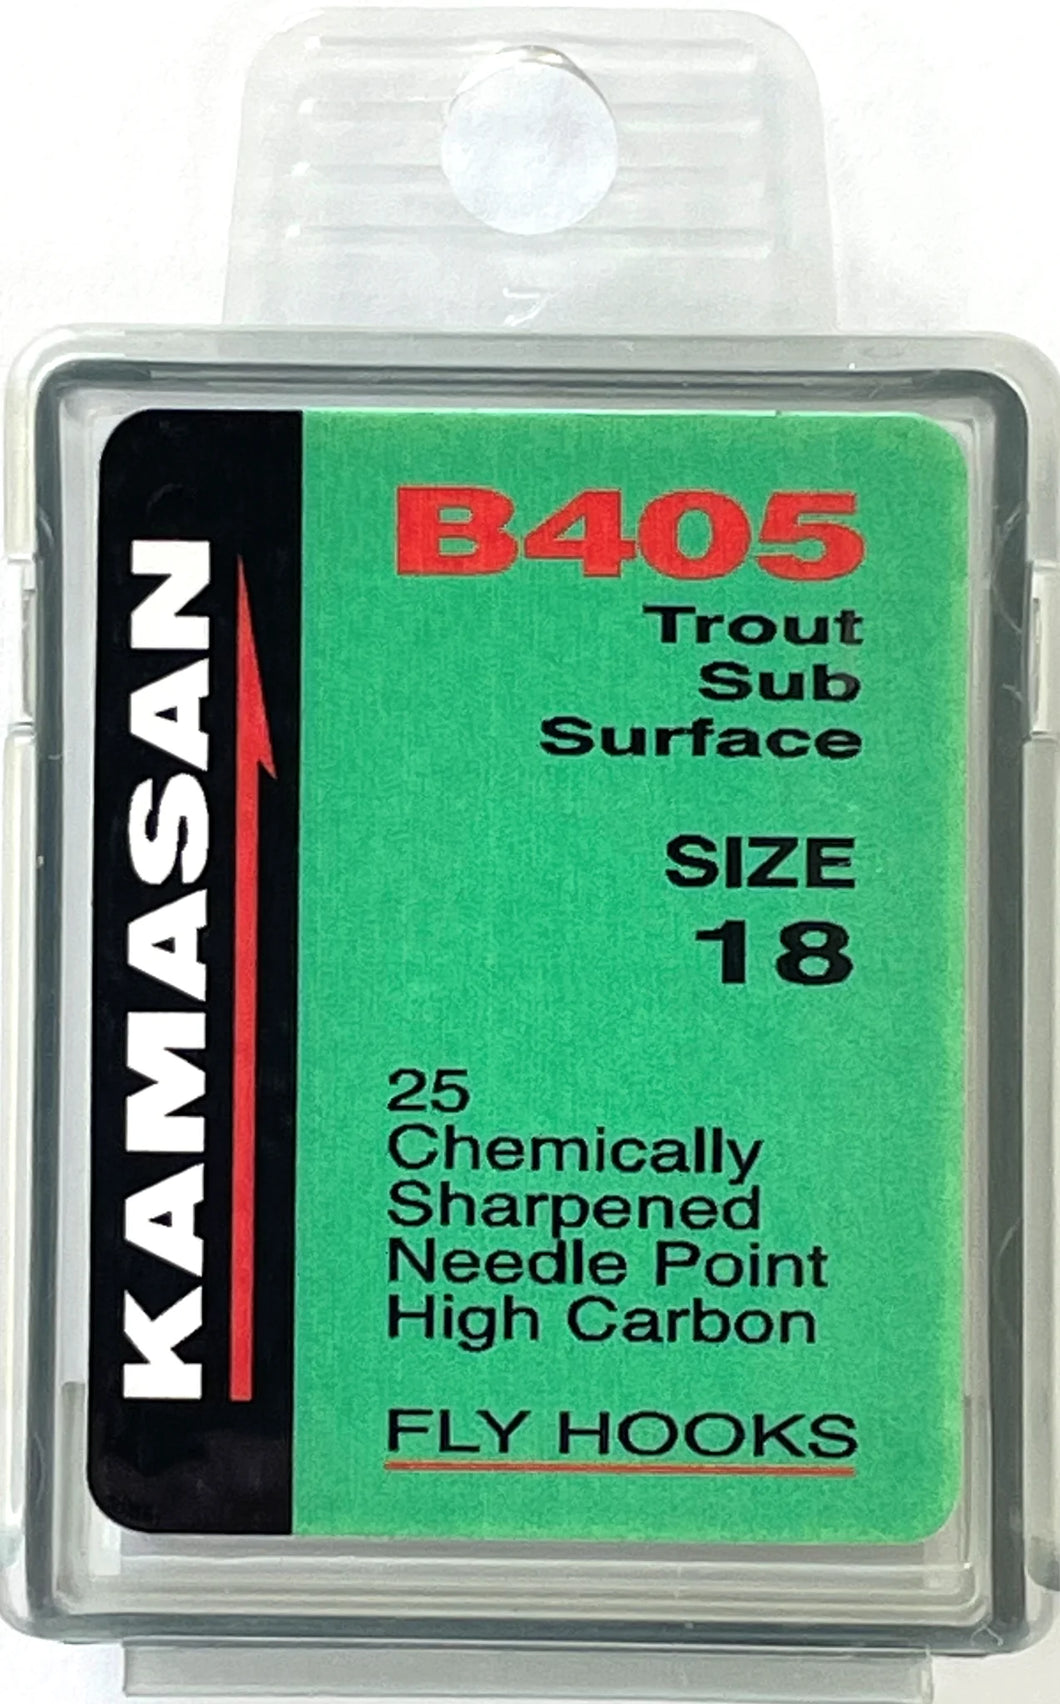 Kamasan B405 Trout Sub Surface Fly Hooks (25 Pack)